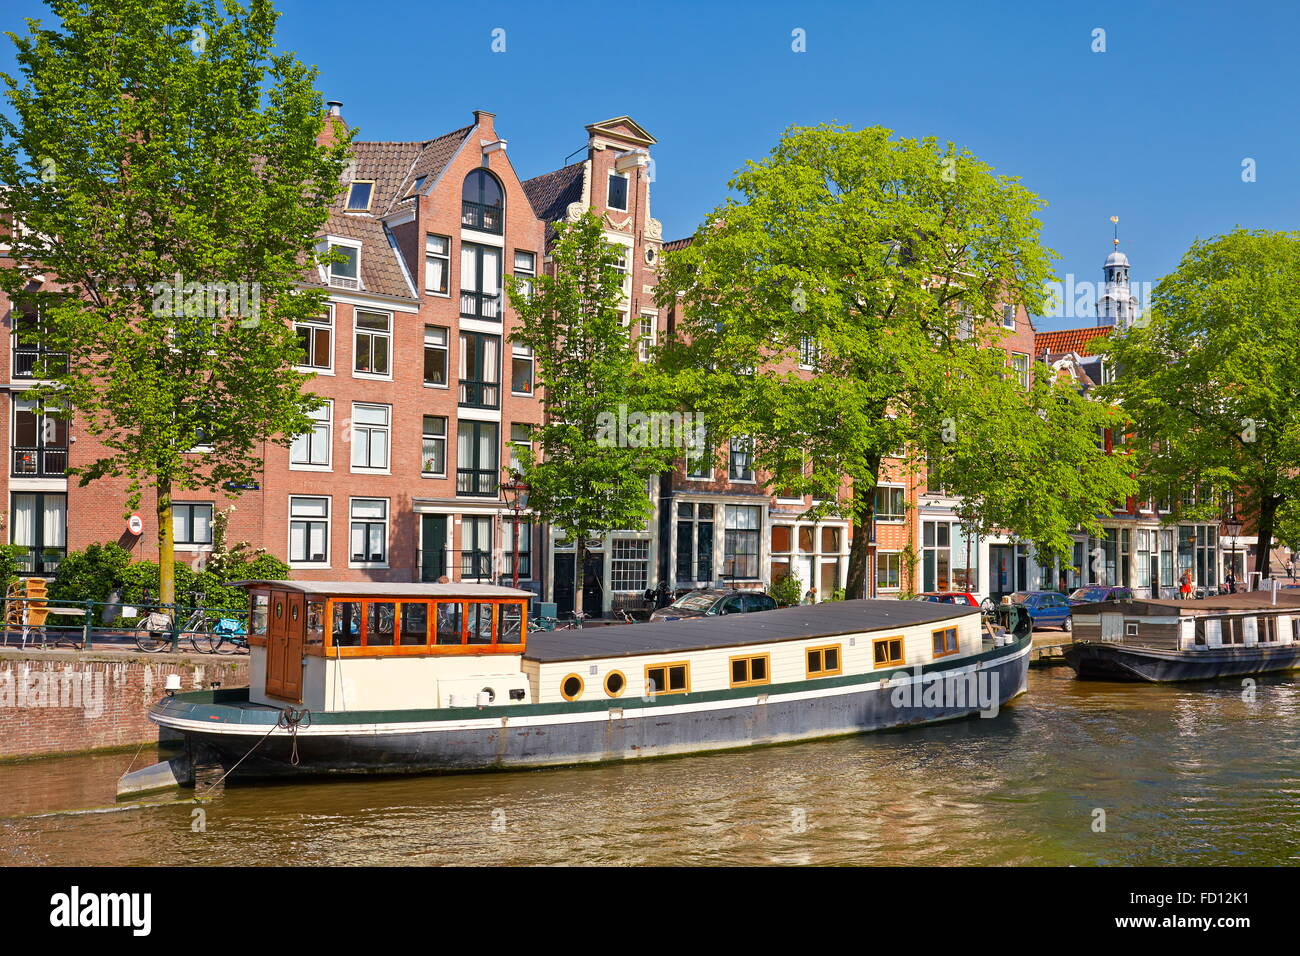 Barcaza de casas flotantes de Amsterdam - Holanda, Países Bajos Foto de stock